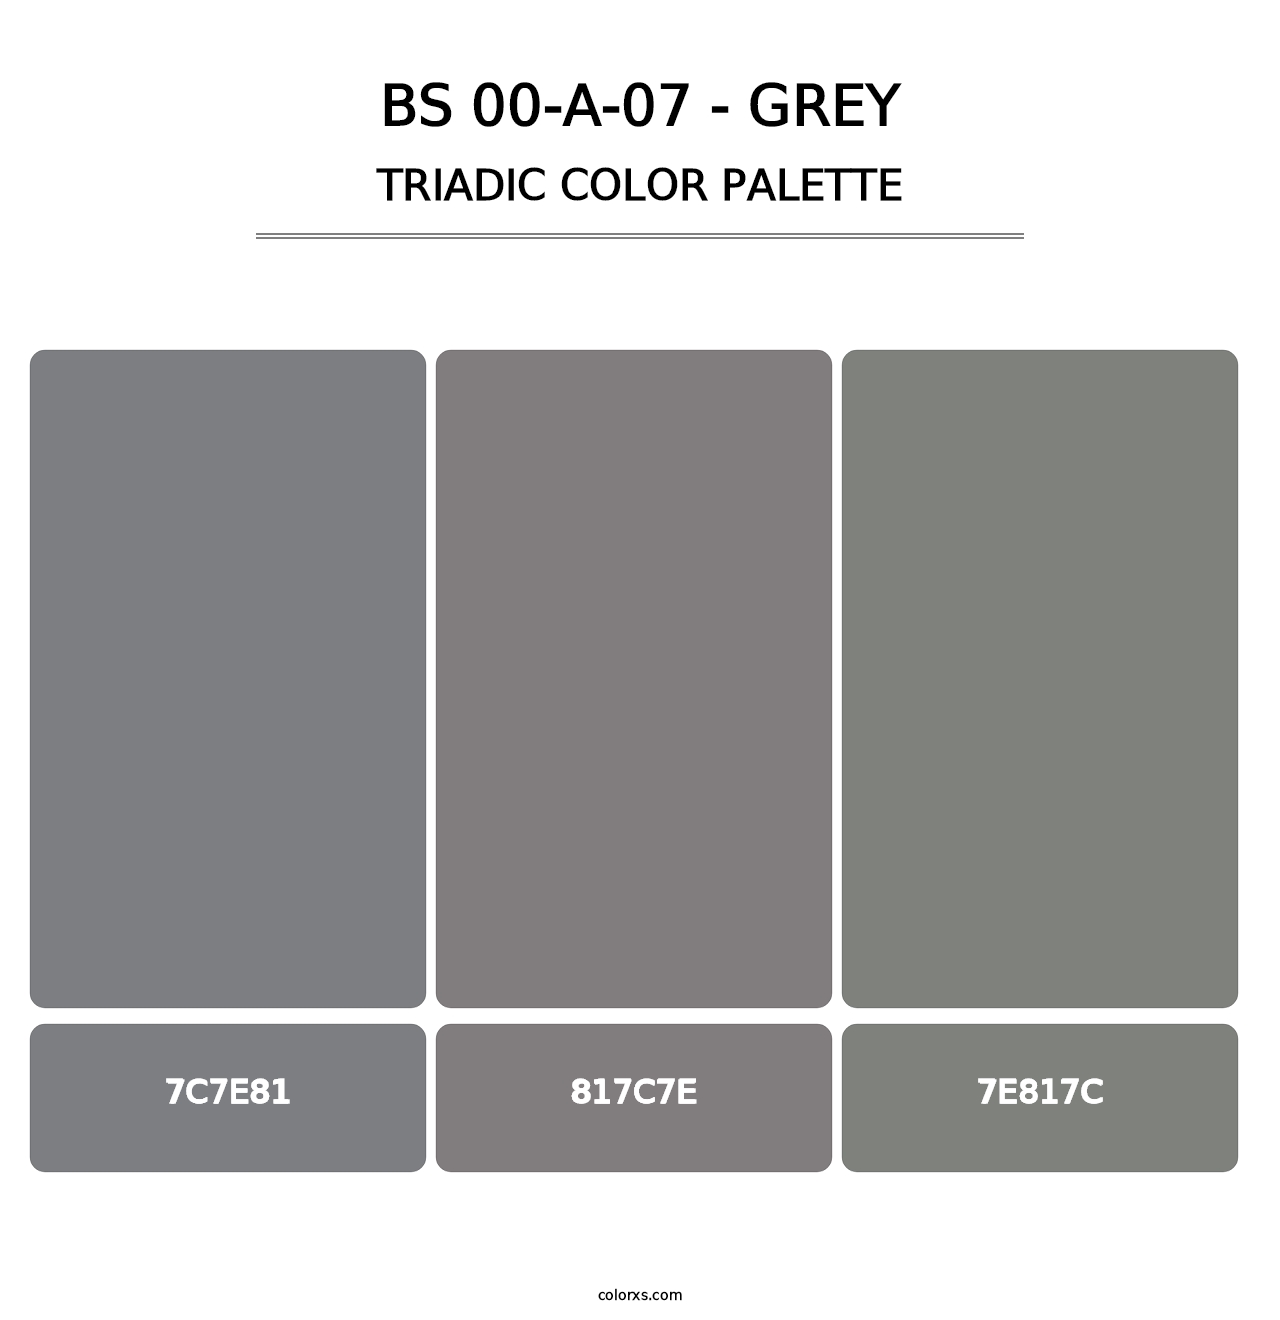 BS 00-A-07 - Grey - Triadic Color Palette